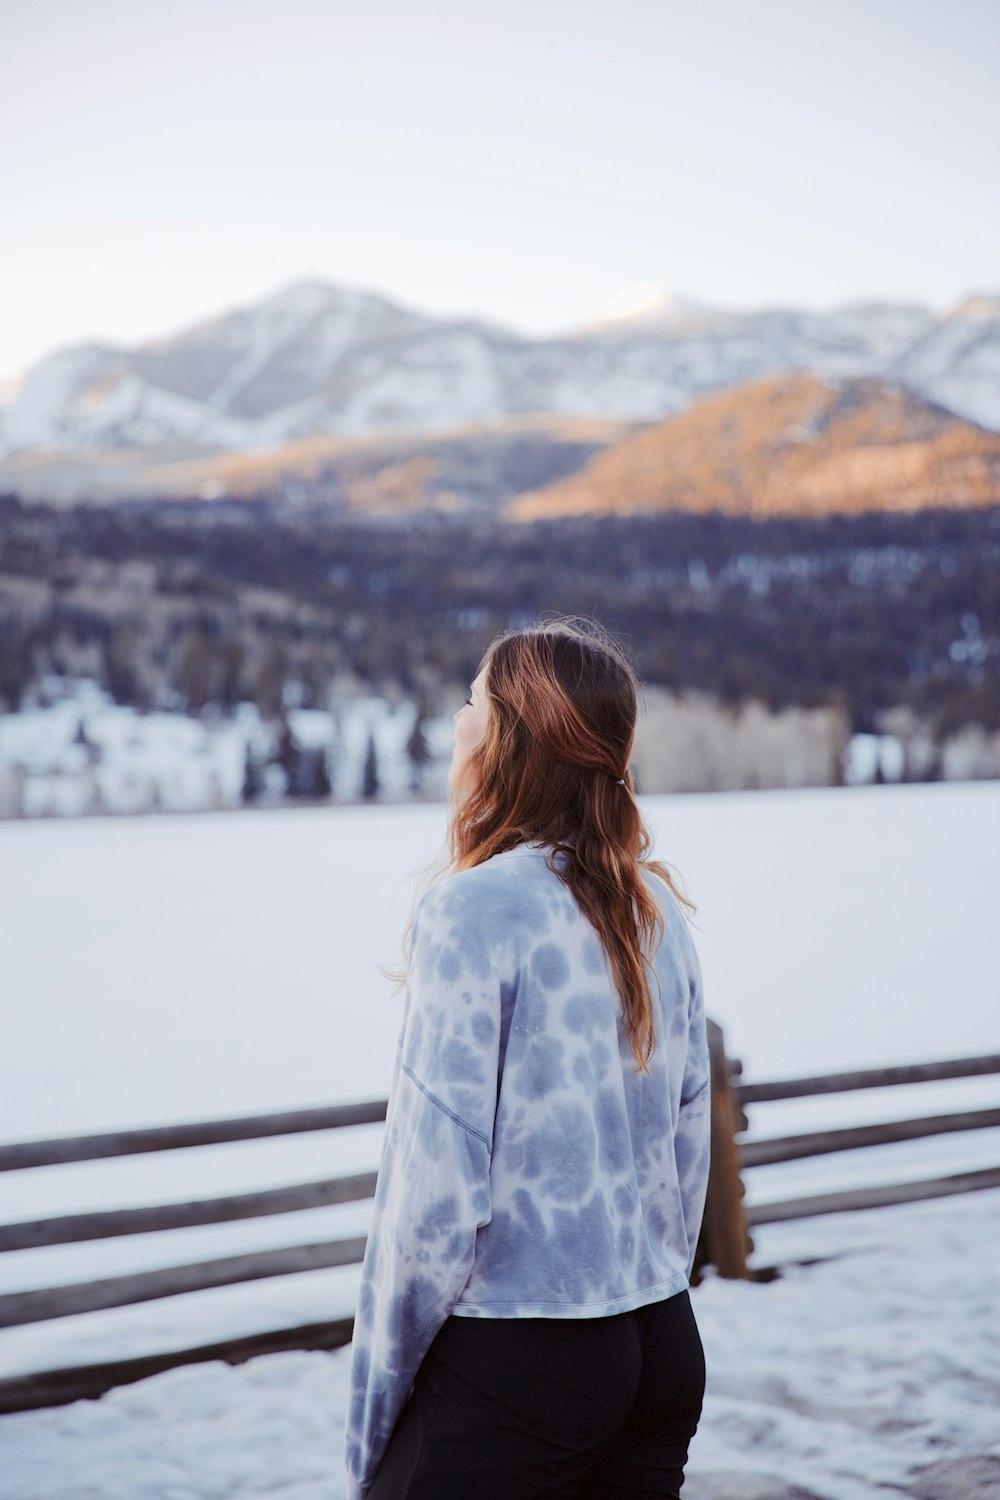 Una donna in piedi di fronte a una montagna coperta di neve